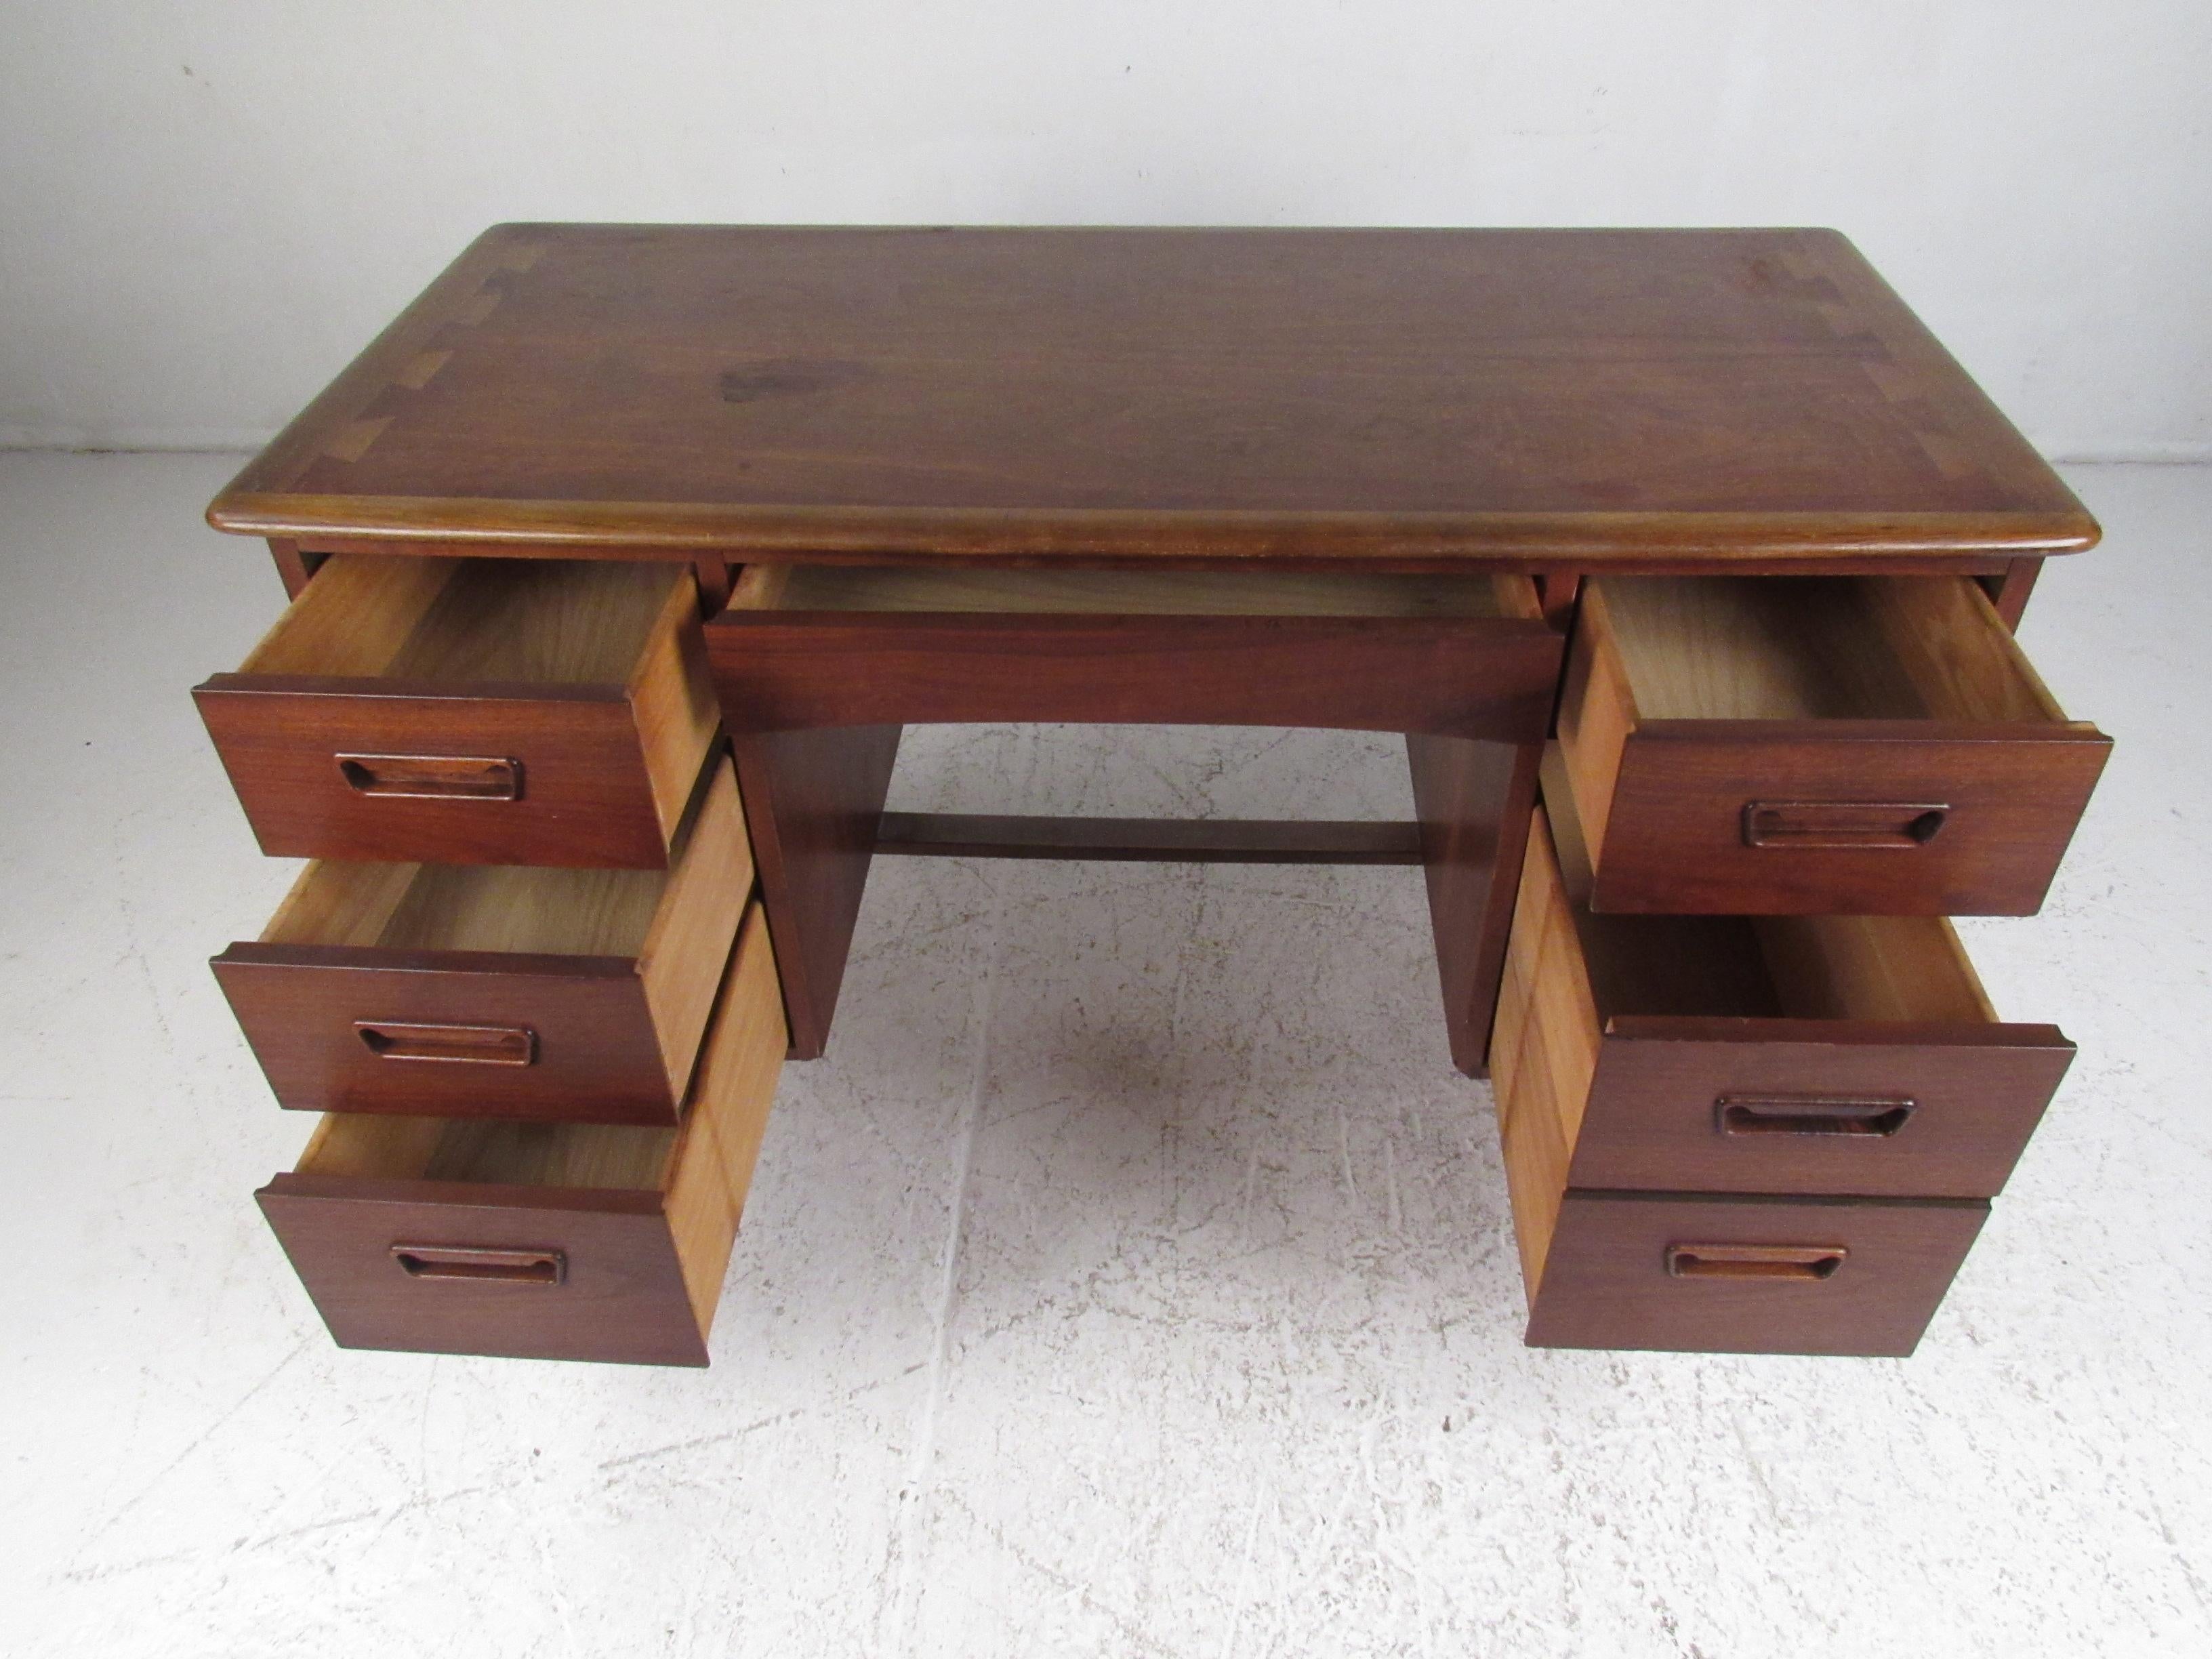 modrn mid-century layne desk